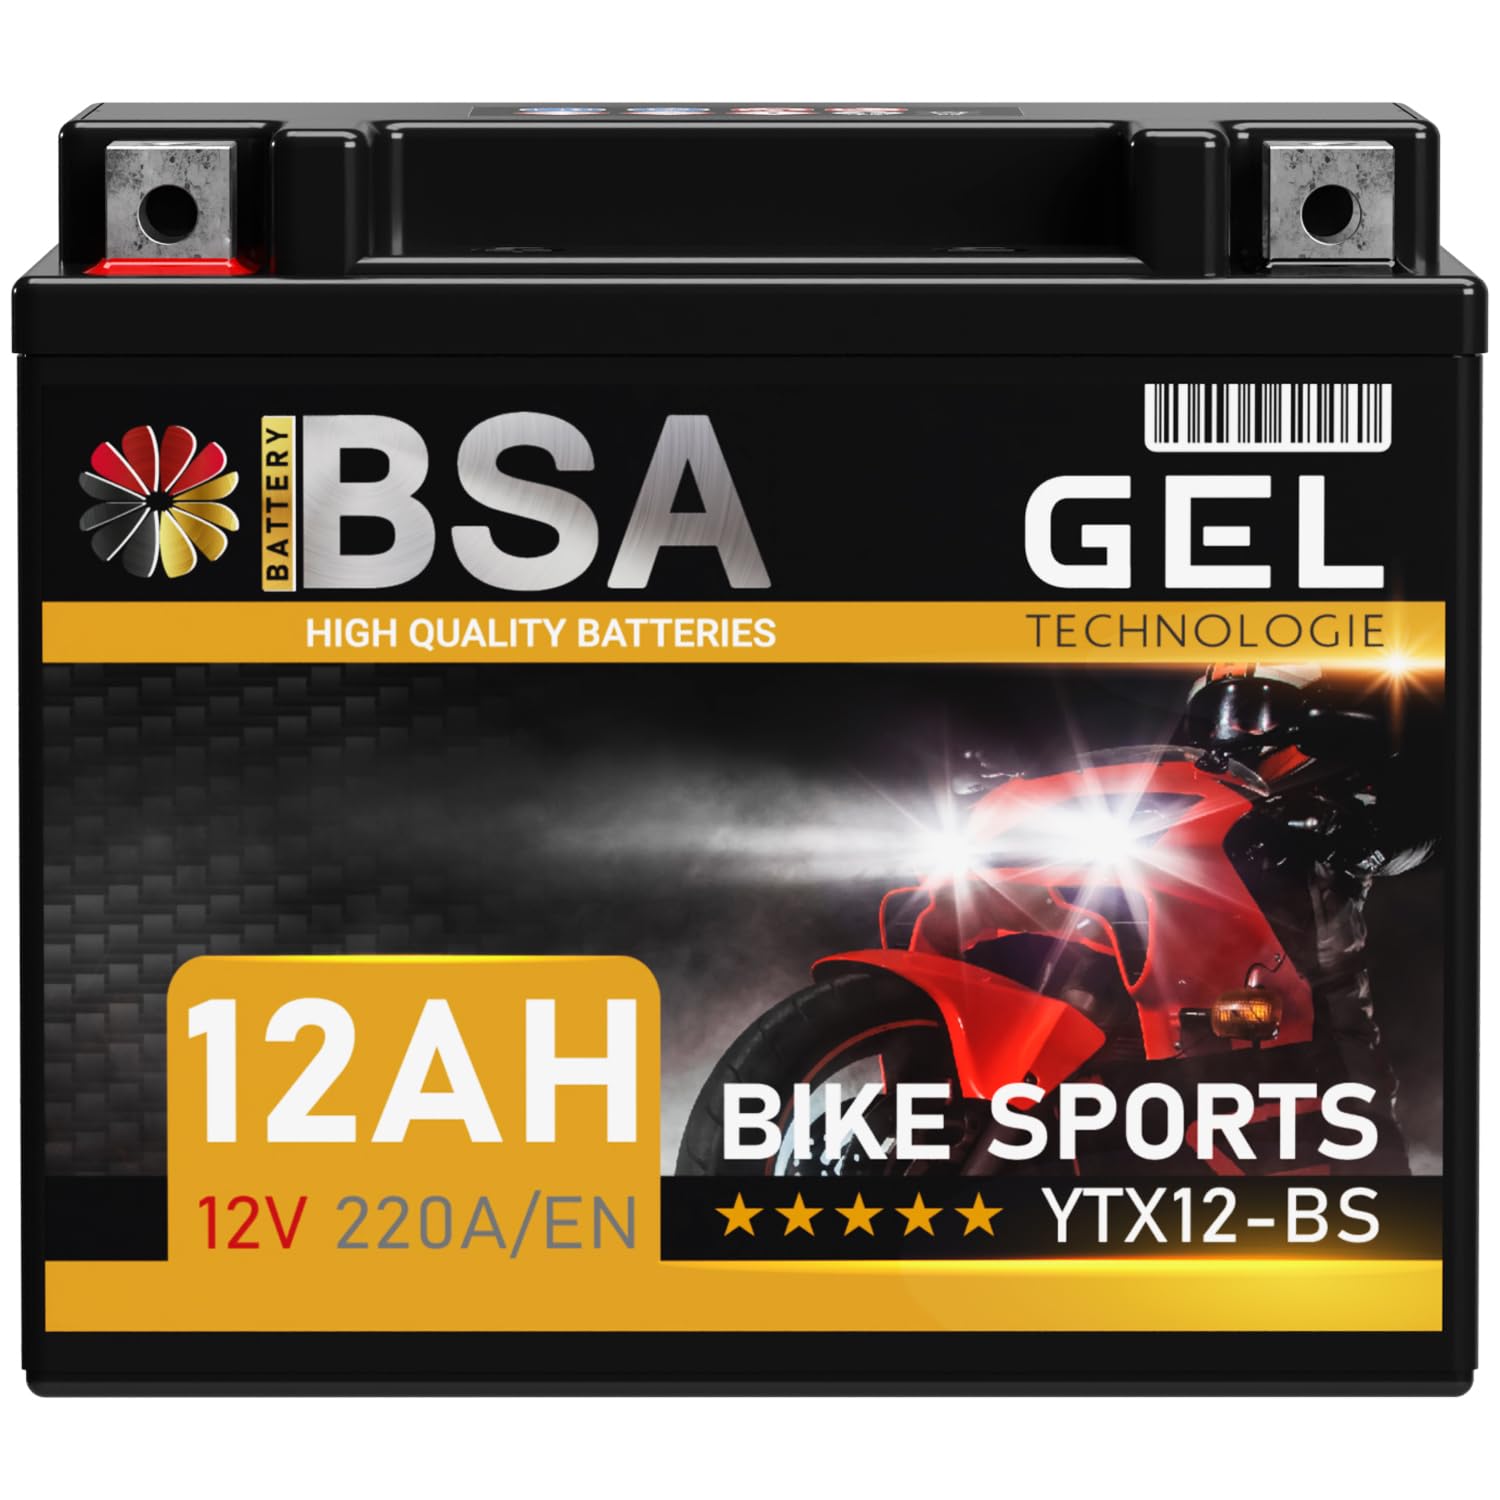 BSA YTX12-BS GEL Motorradbatterie 12V 12Ah 220A/EN Batterie doppelte Lebensdauer entspricht CTX12-BS 51012 GTX12-BS Quad vorgeladen auslaufsicher wartungsfrei von BSA BATTERY HIGH QUALITY BATTERIES